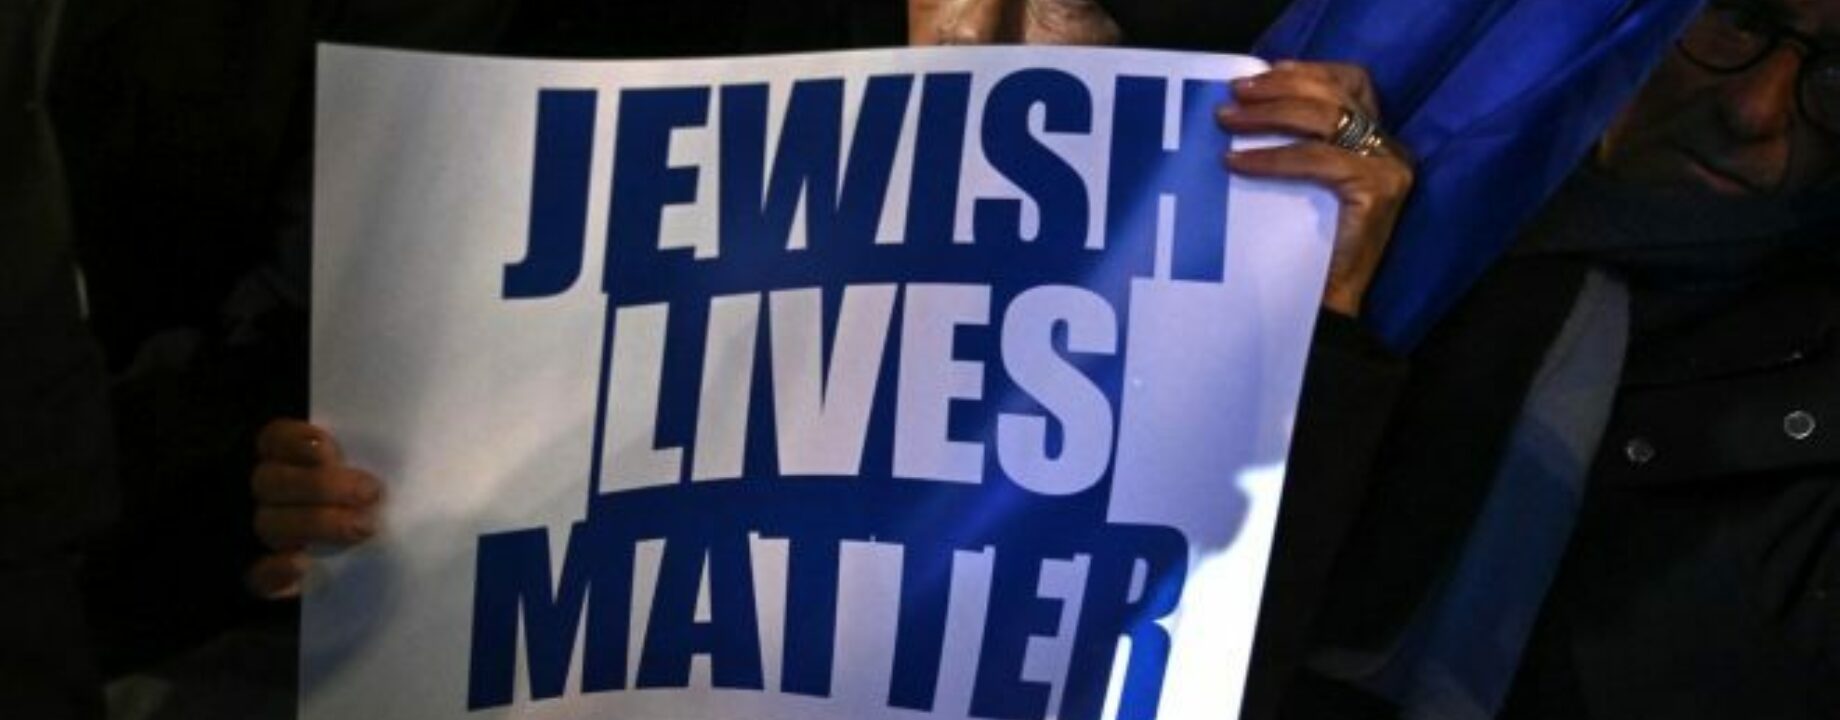 Jewish lives matter